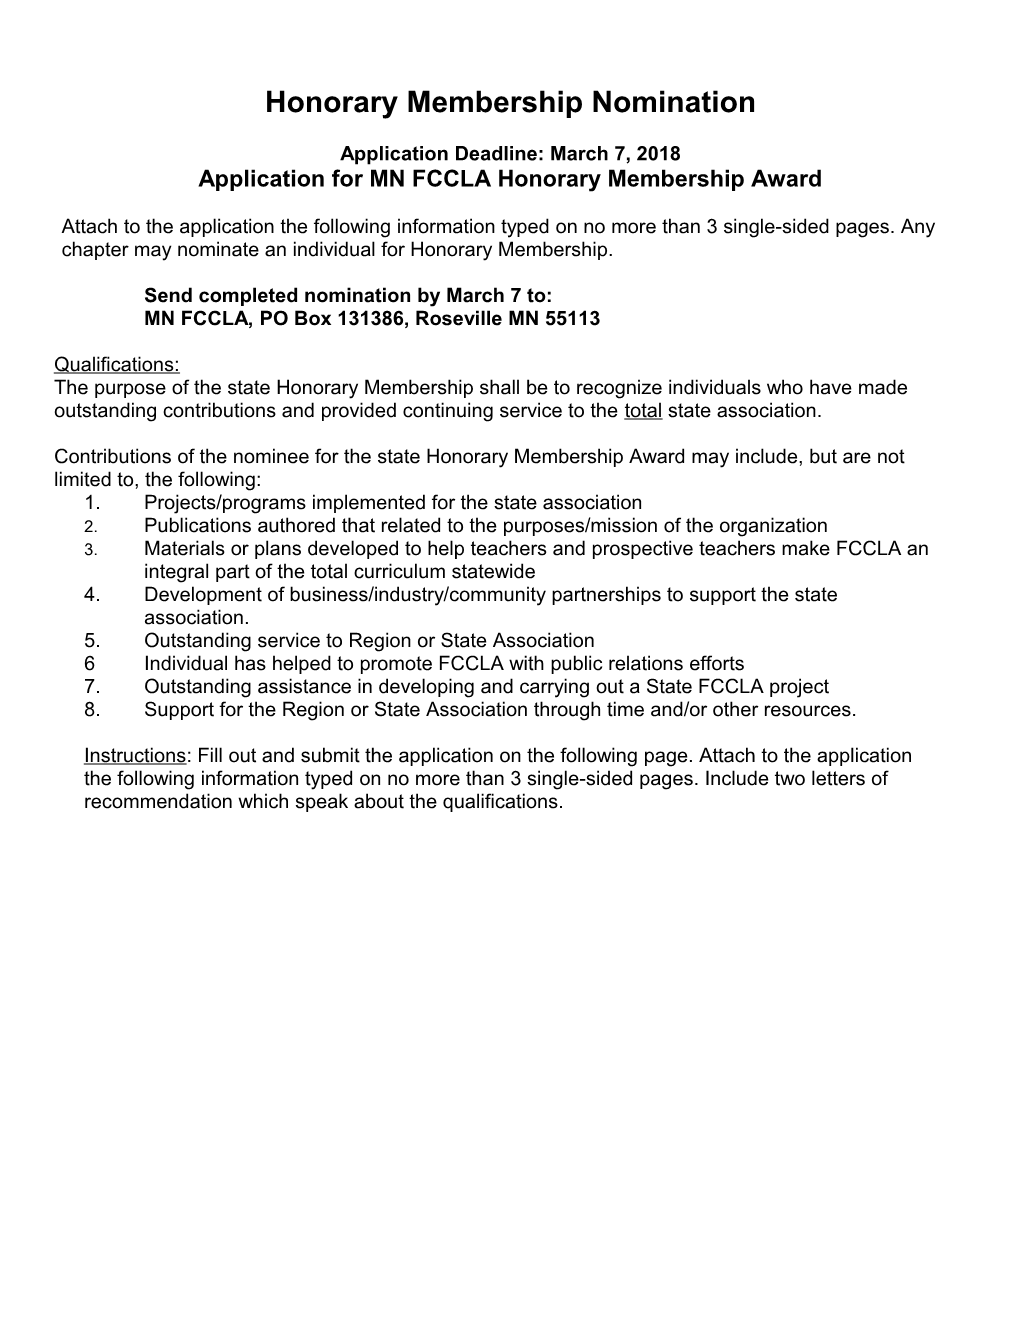 Application for MN FCCLA Honorary Membership Award